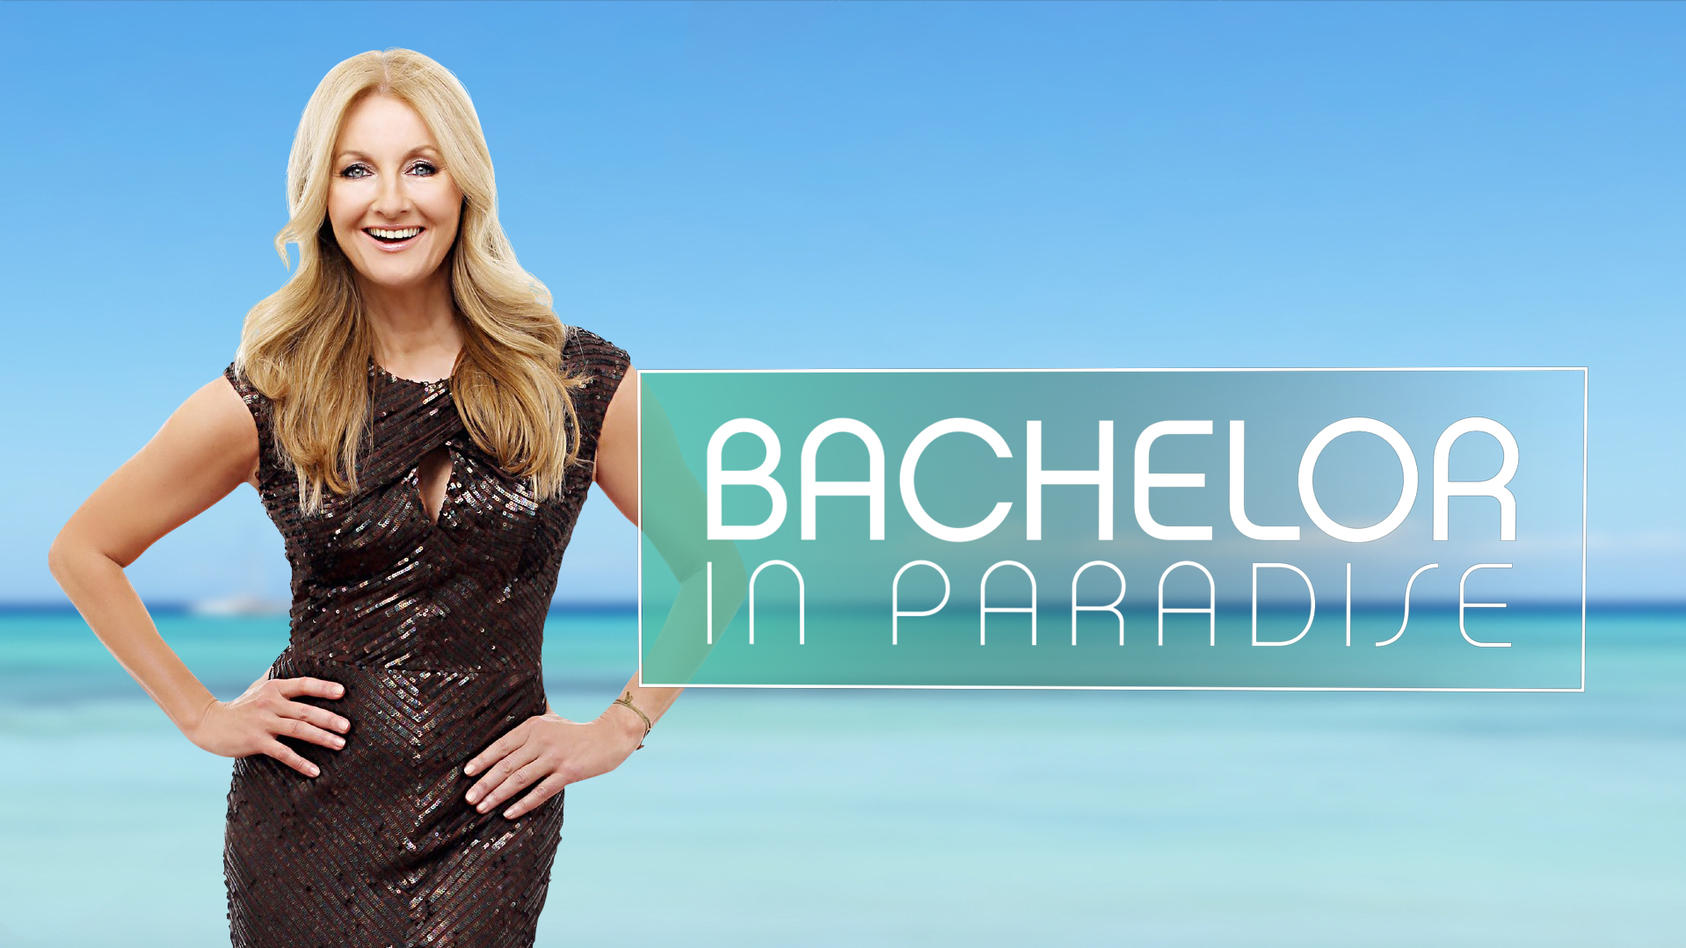 "Bachelor in Paradise - der Talk"